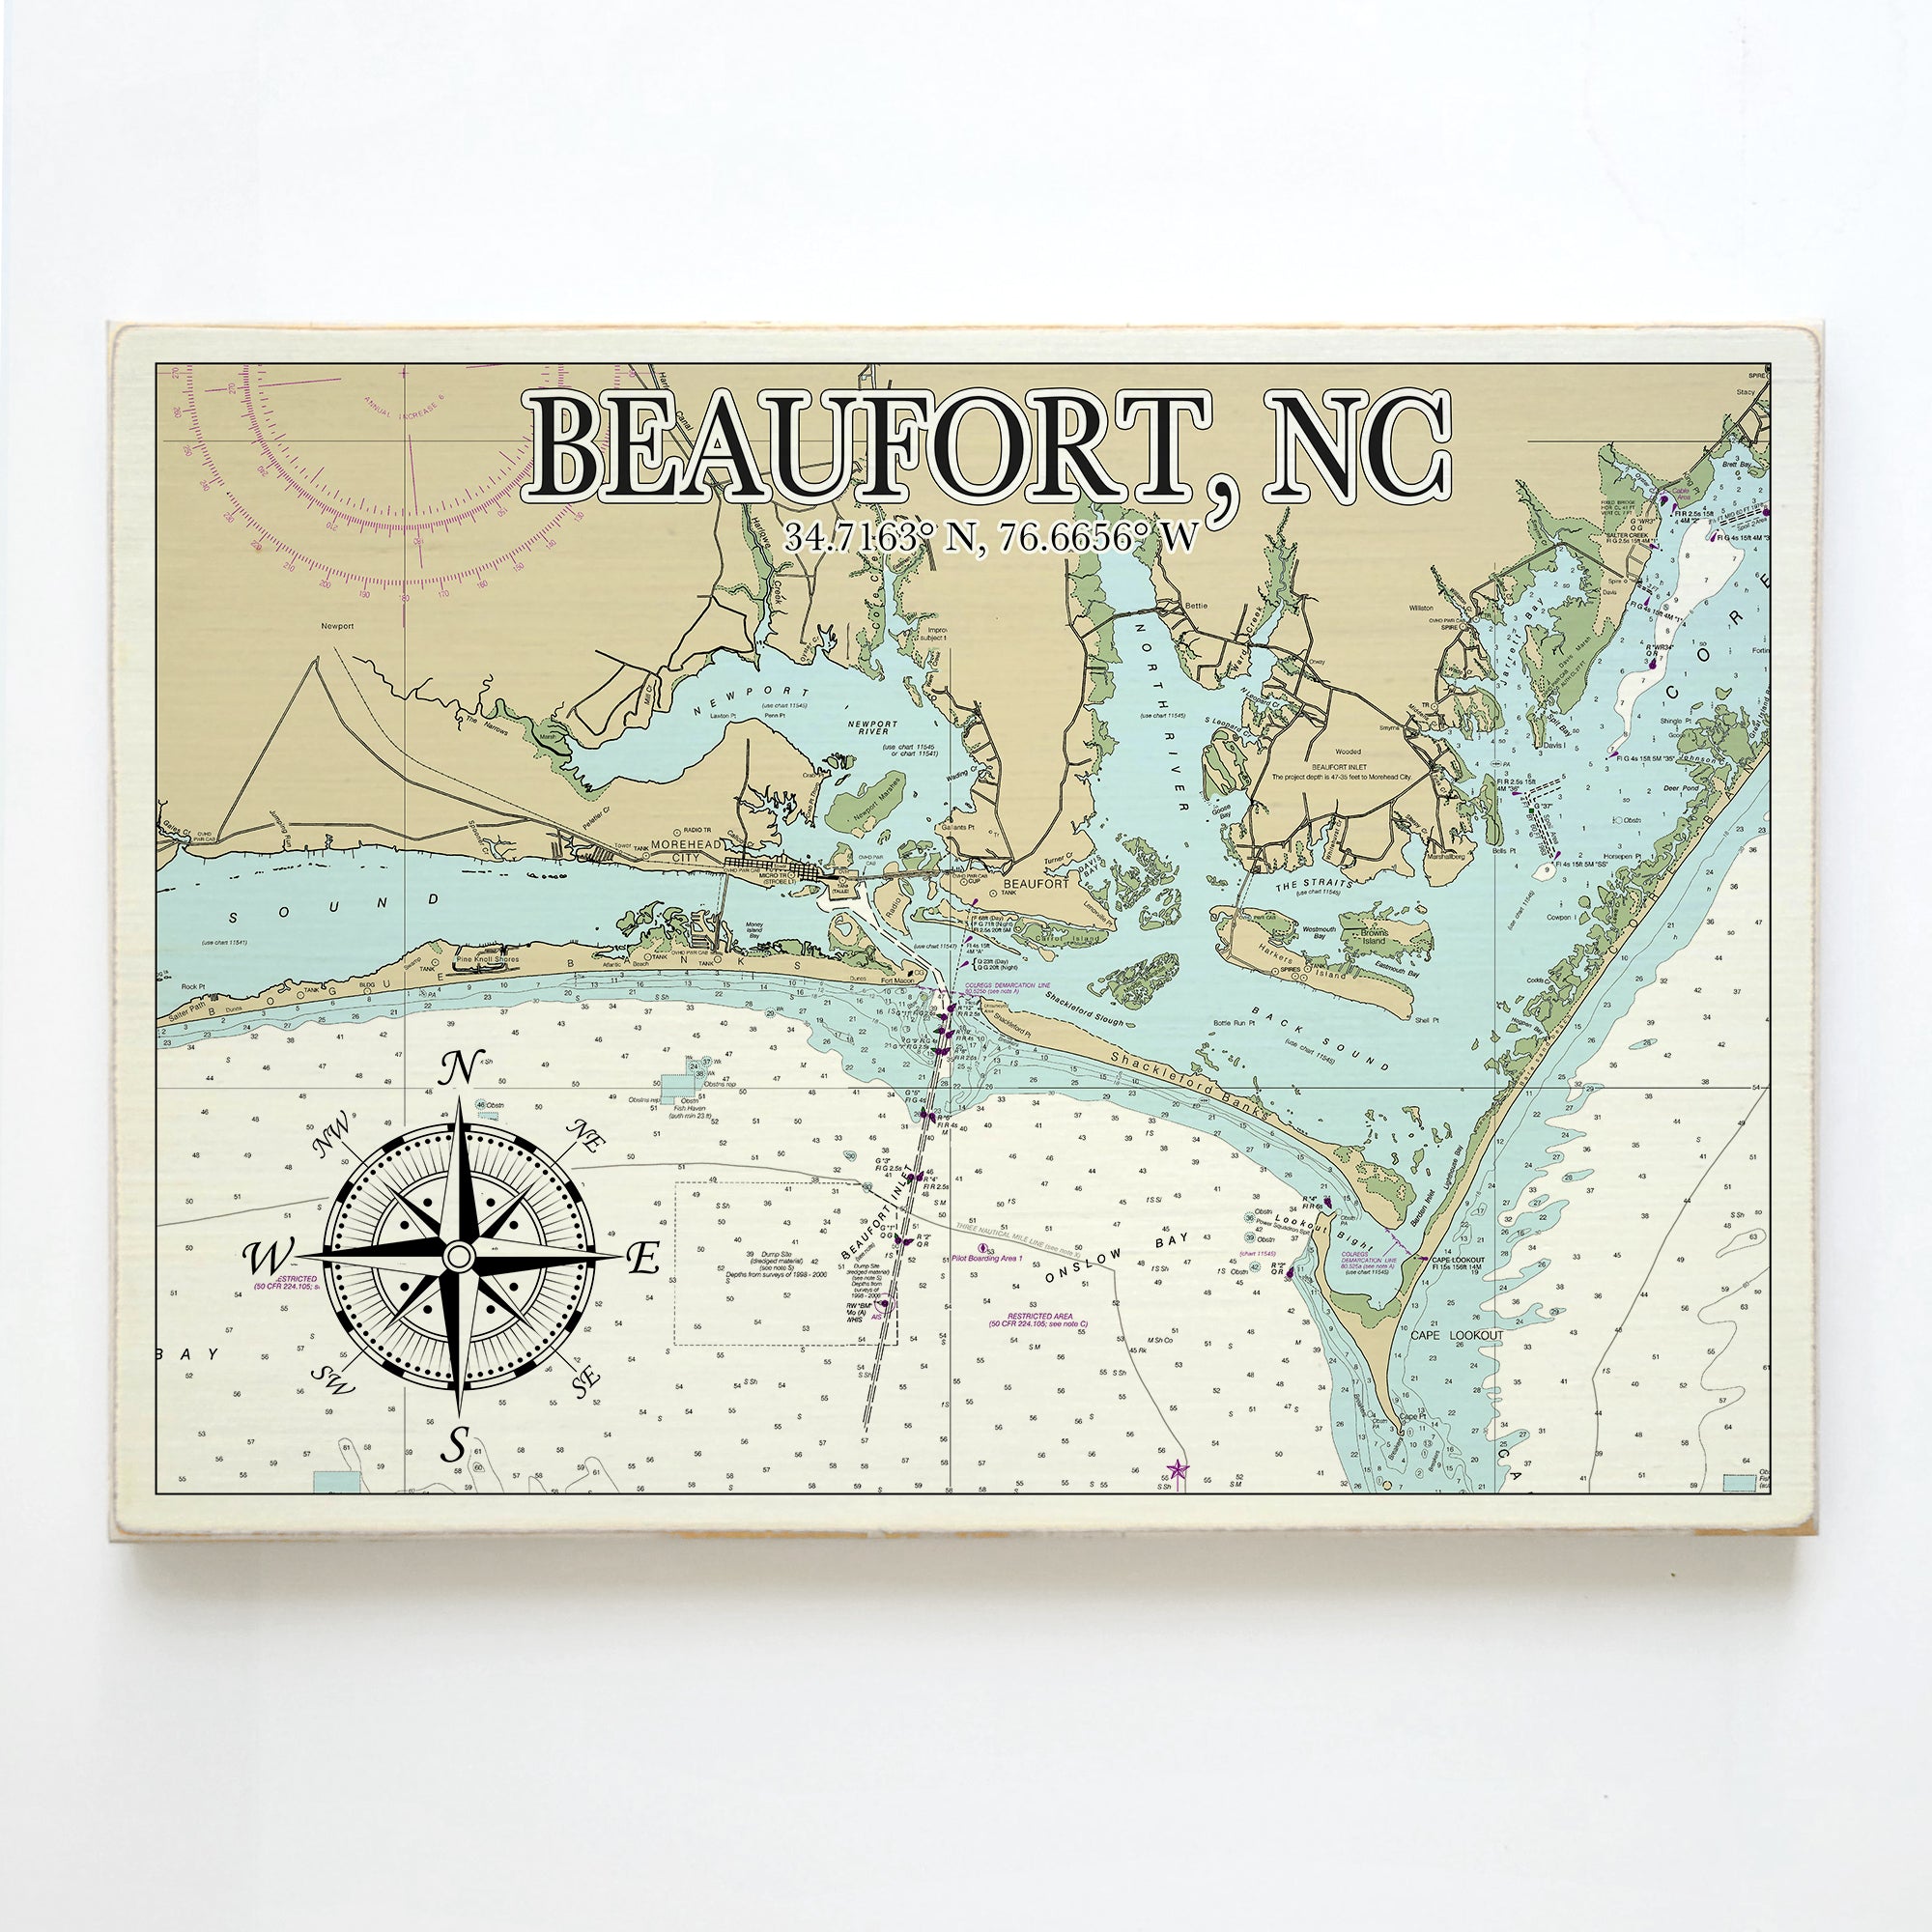 Beaufort, NC  Plank Map